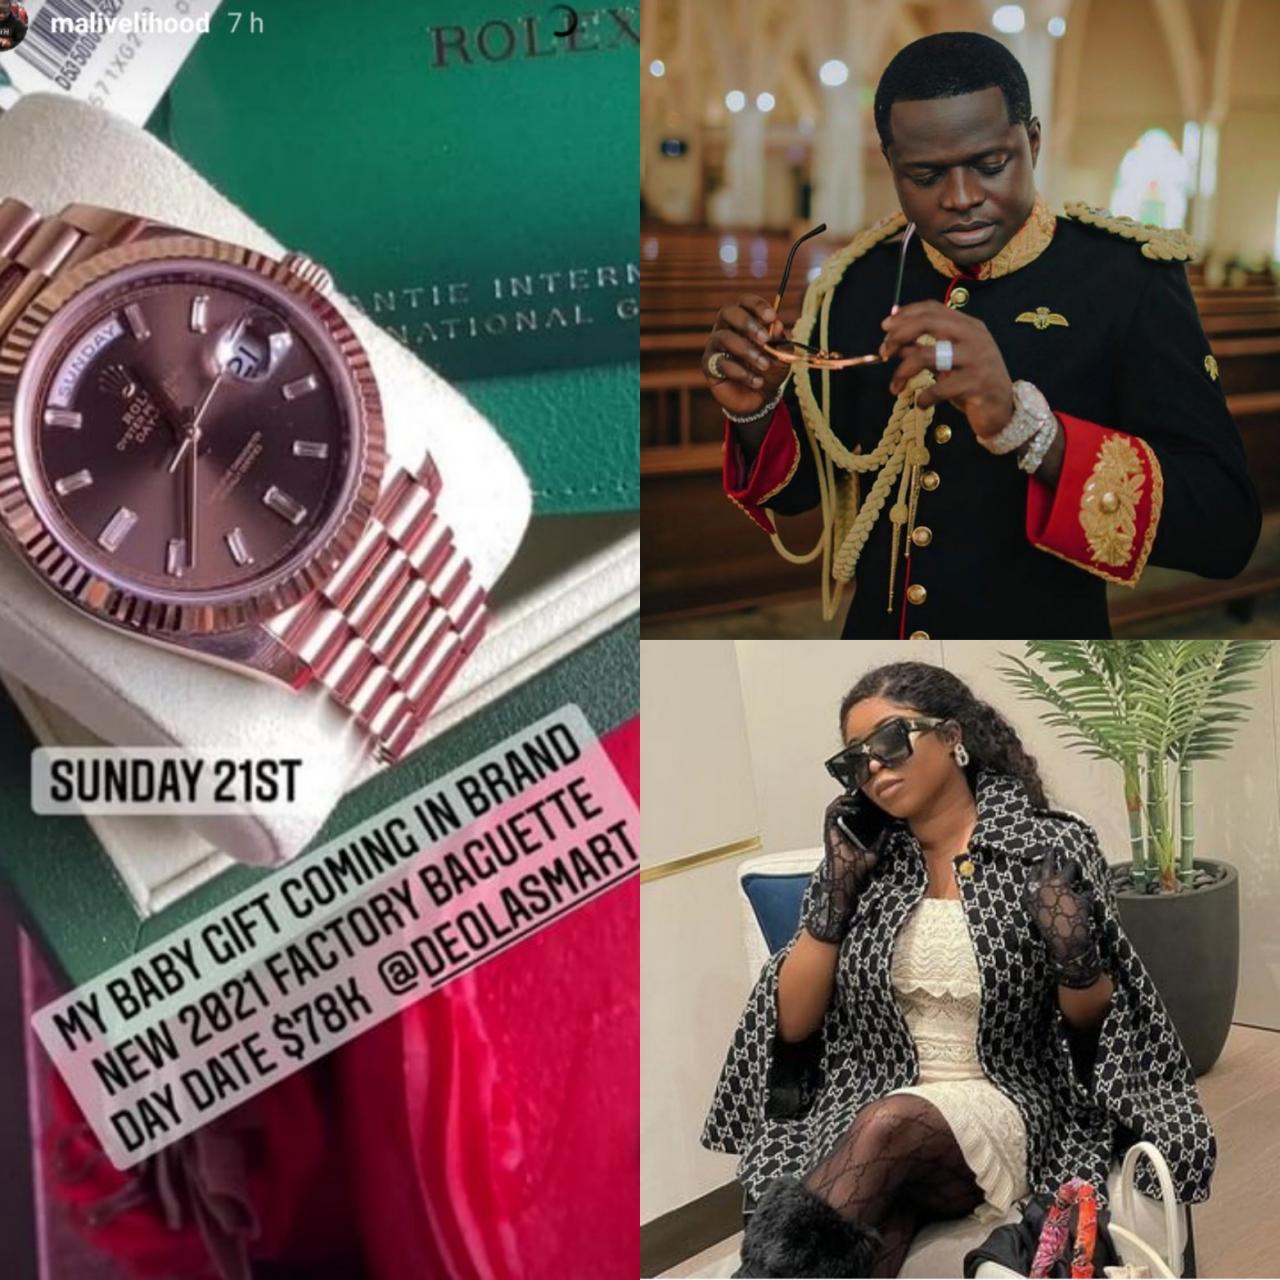 Nigerian jeweler, Malivelihood gifts wife Deola Smart 2021 Rolex watch worth over 32 million Naira ($78k) for her birthday (video)